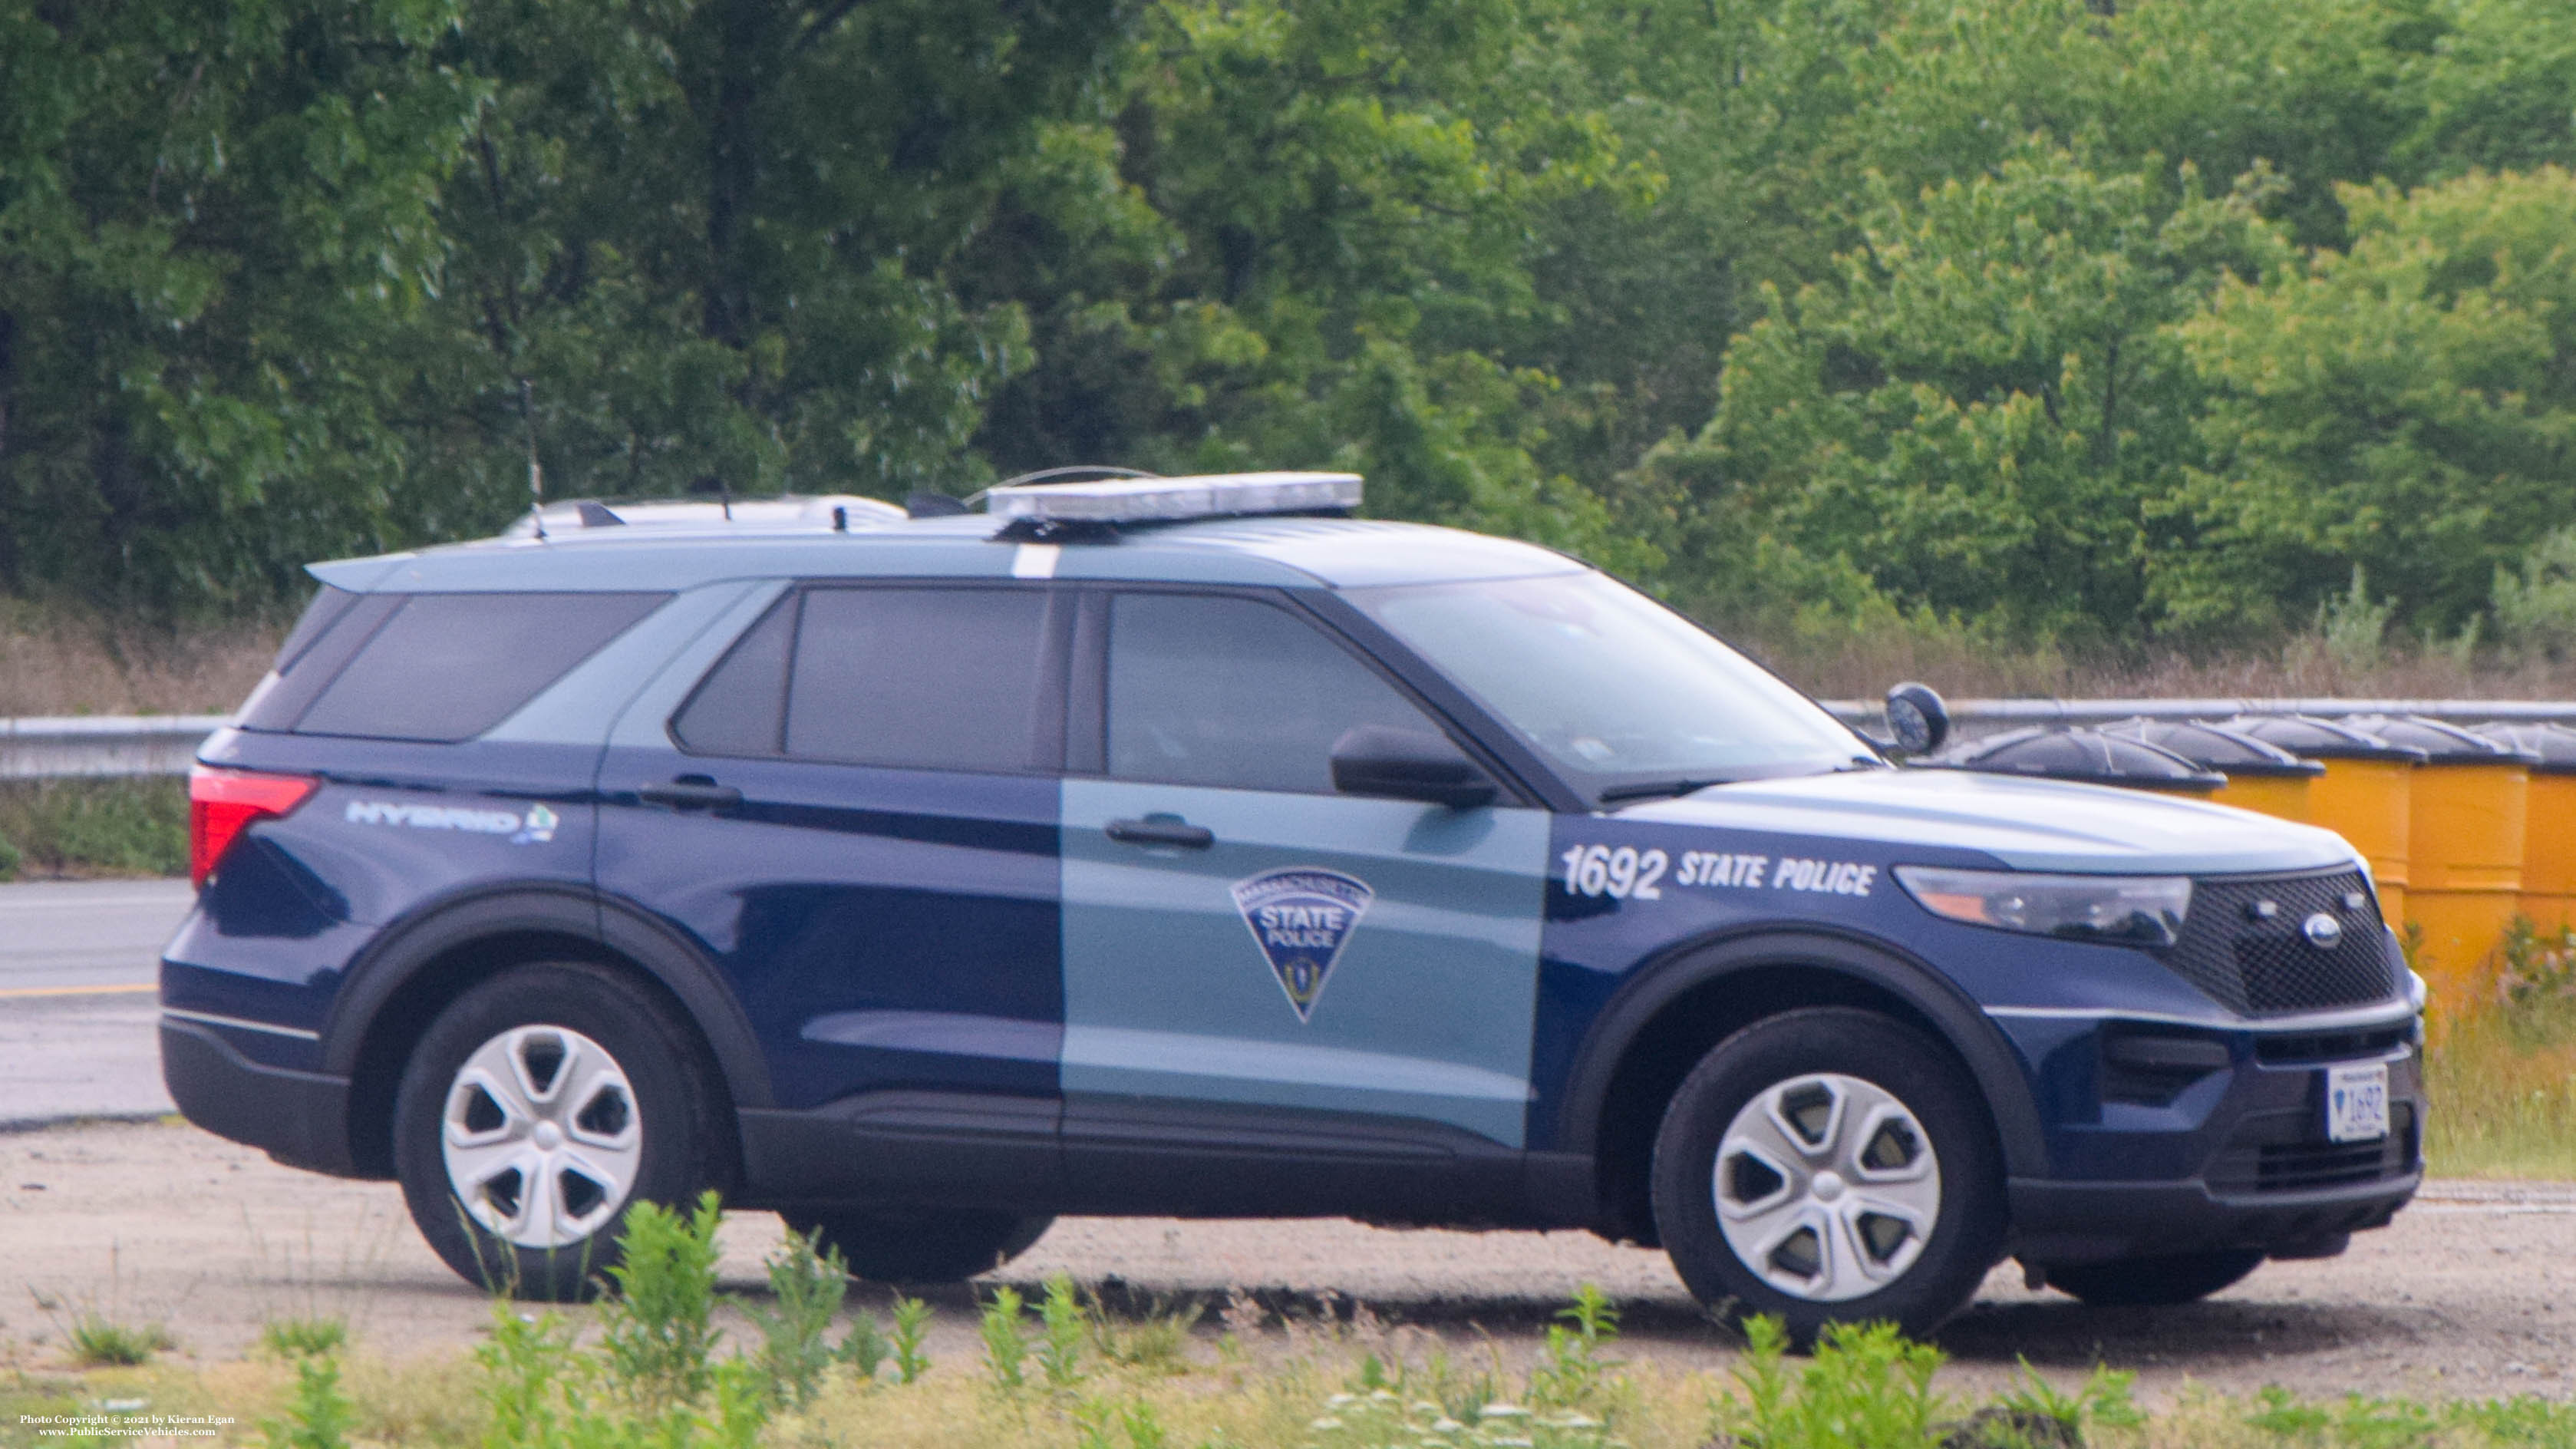 A photo  of Massachusetts State Police
            Cruiser 1692, a 2020 Ford Police Interceptor Utility Hybrid             taken by Kieran Egan